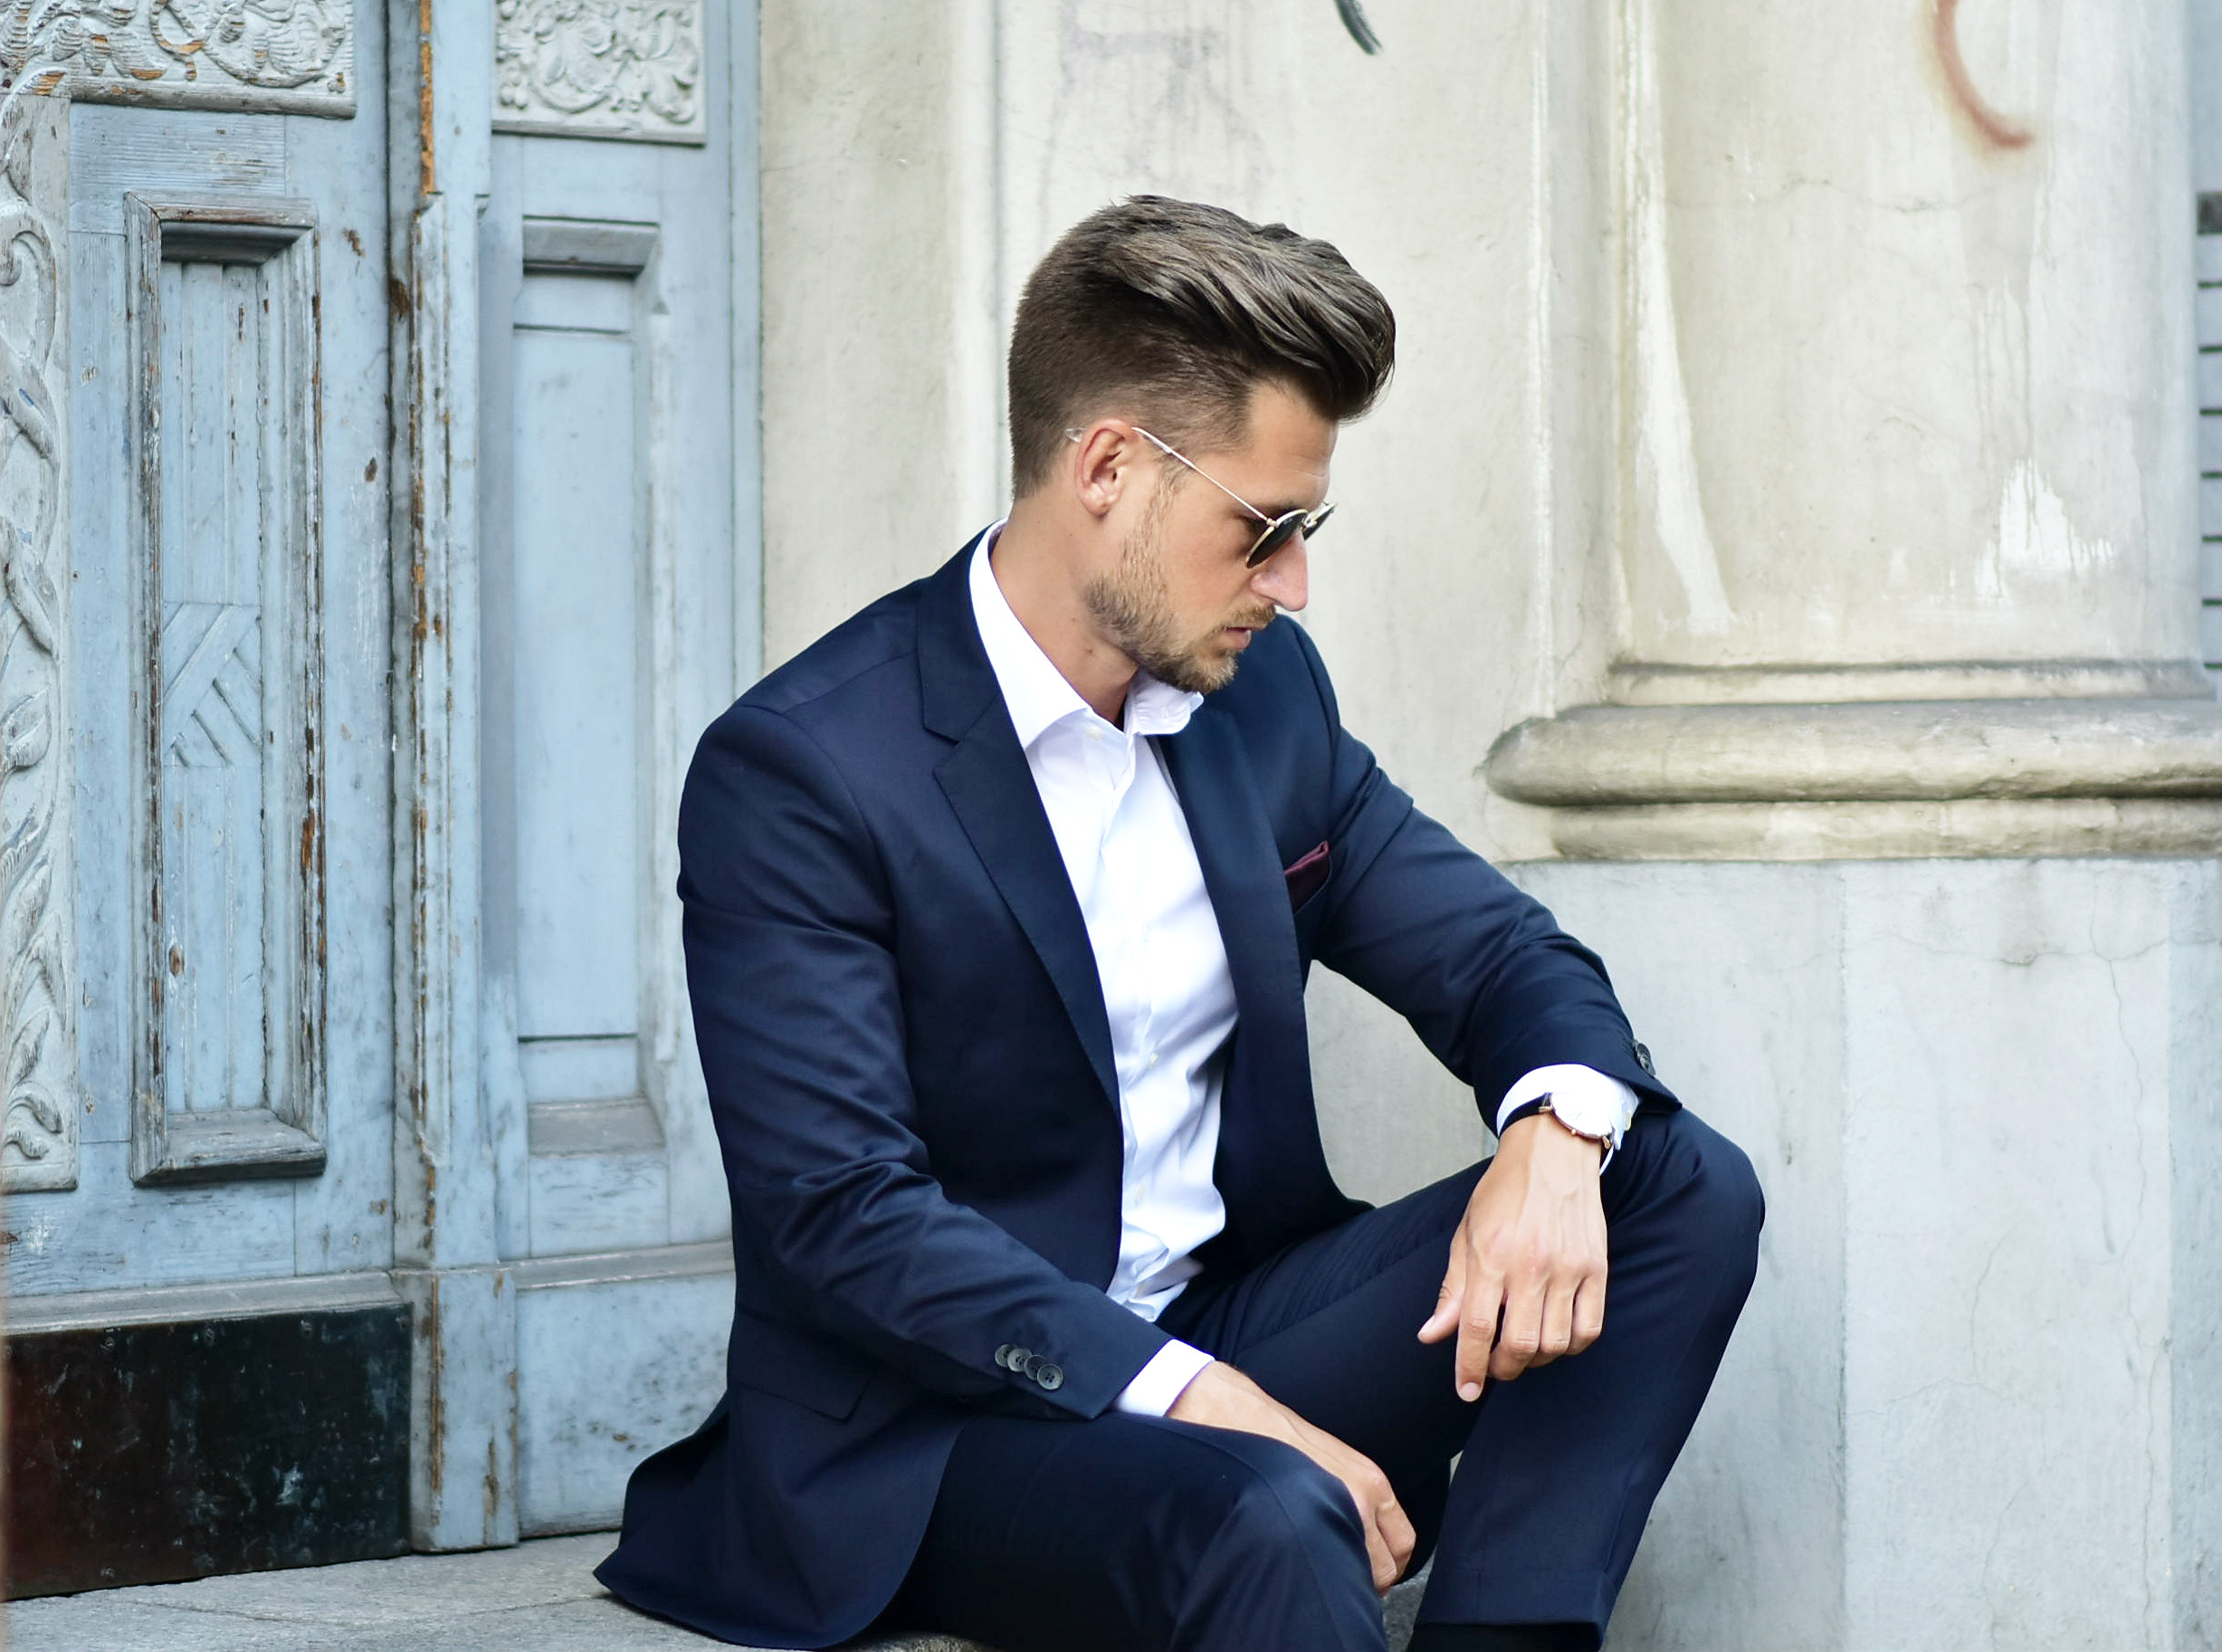 Tommeezjerry-Styleblog-Männerblog-Männer-Modeblog-Berlin-Berlinblog-Männermodeblog-Outfit-Classy-Chic-Suit-Anzug-Hugo-Boss-Nationalmannschaft-Deutschland-Marineblau-Suit-Up